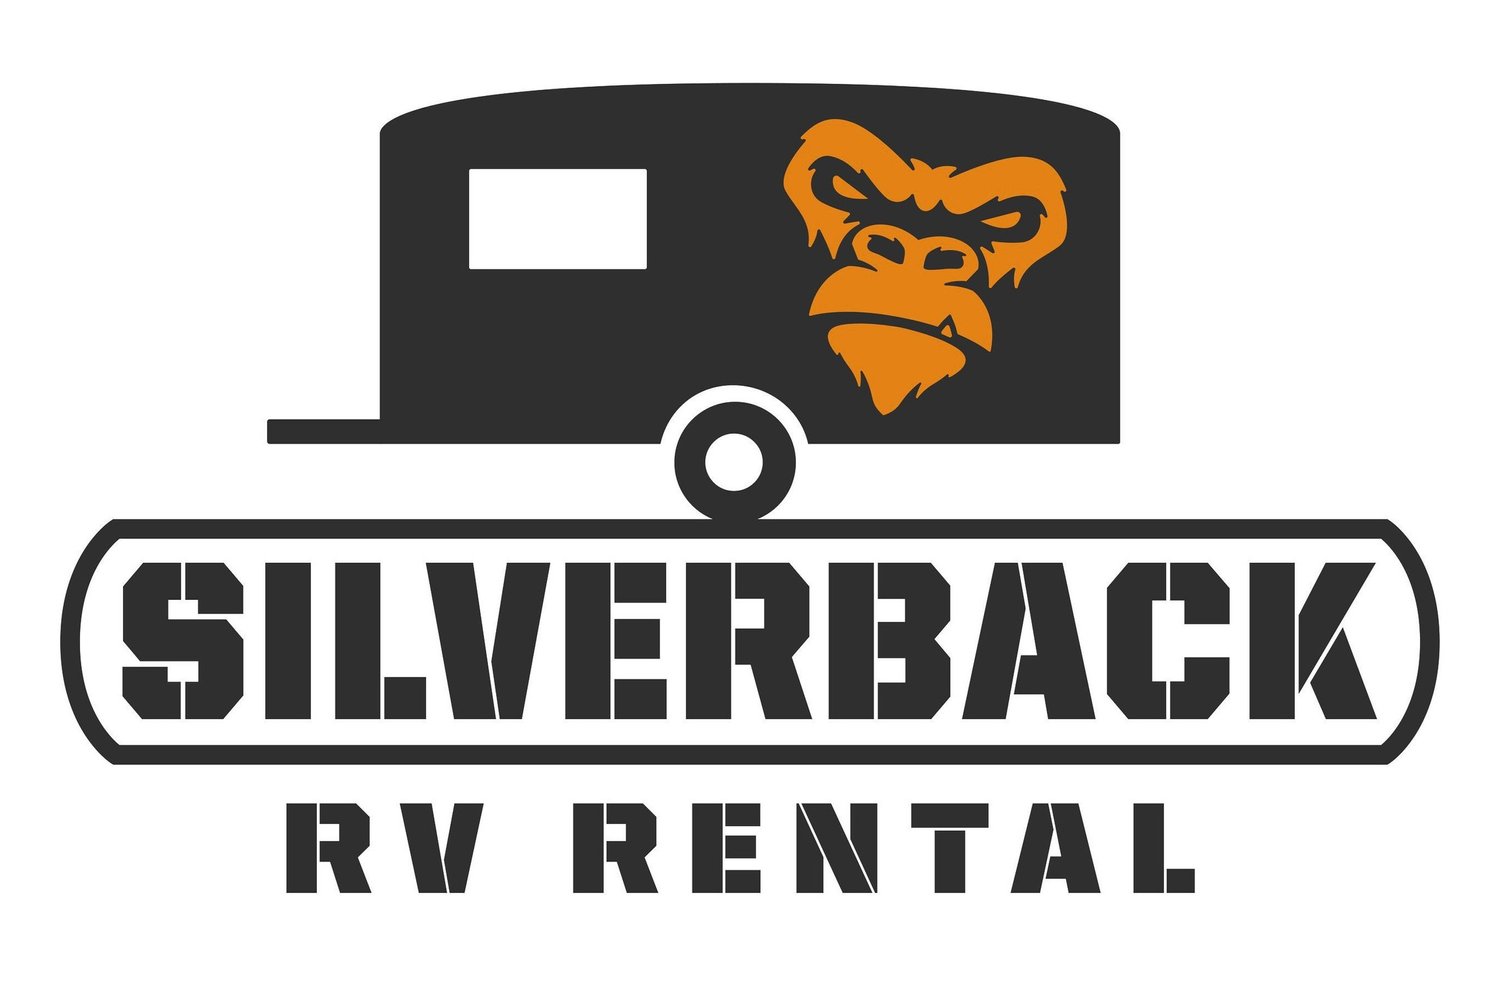 Silverback RV Rental